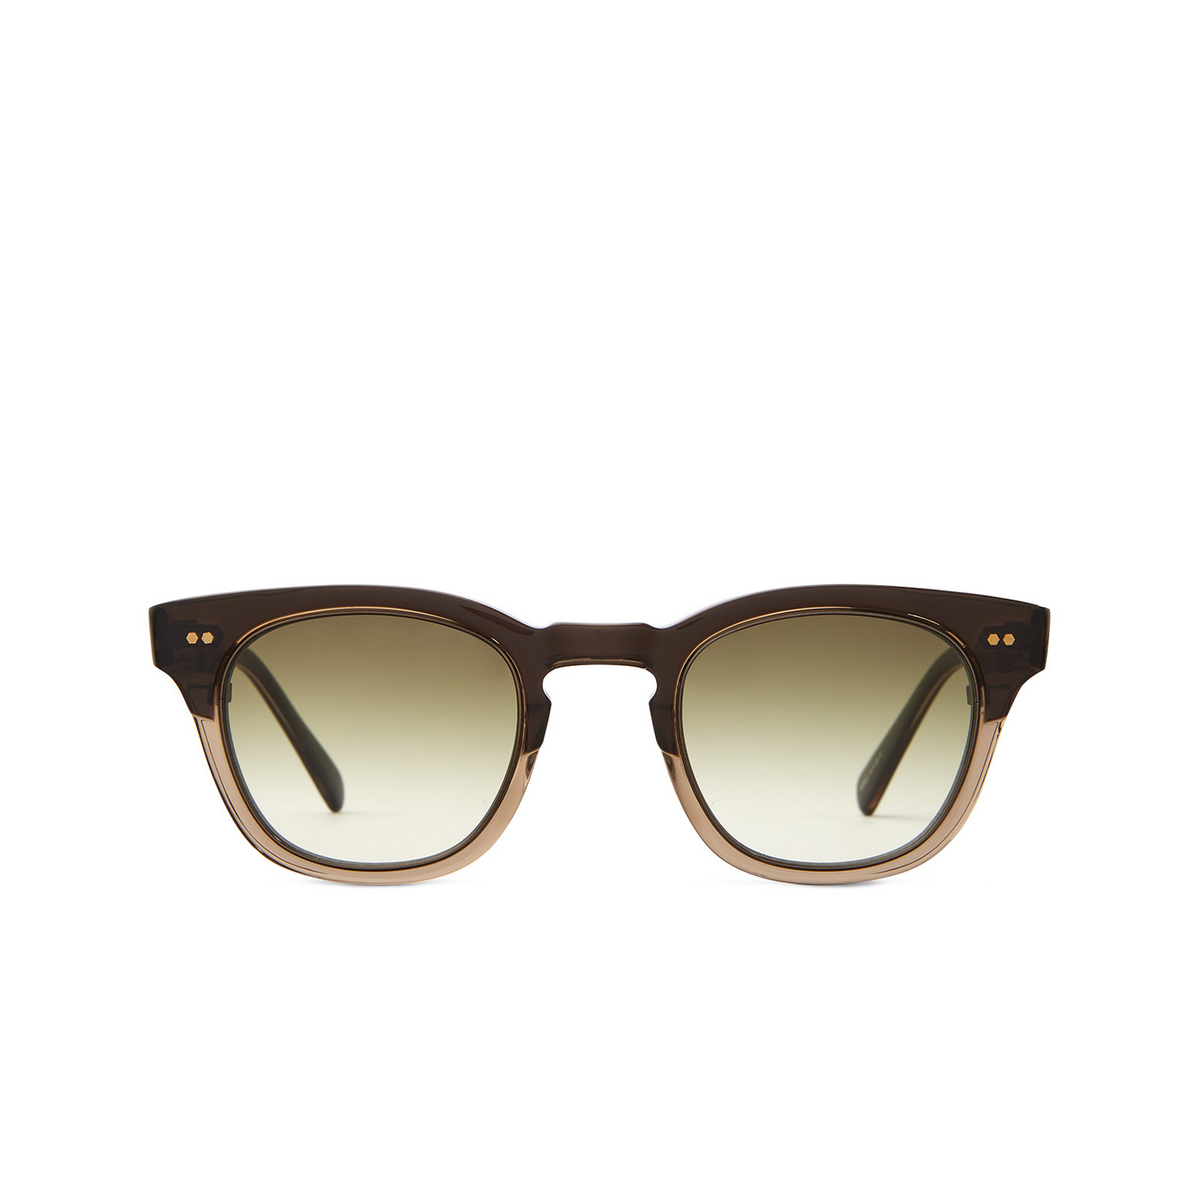 Mr. Leight HANALEI II S Sunglasses BKTR-ATG/ELM Black Tar-Antique Gold/Elm - front view